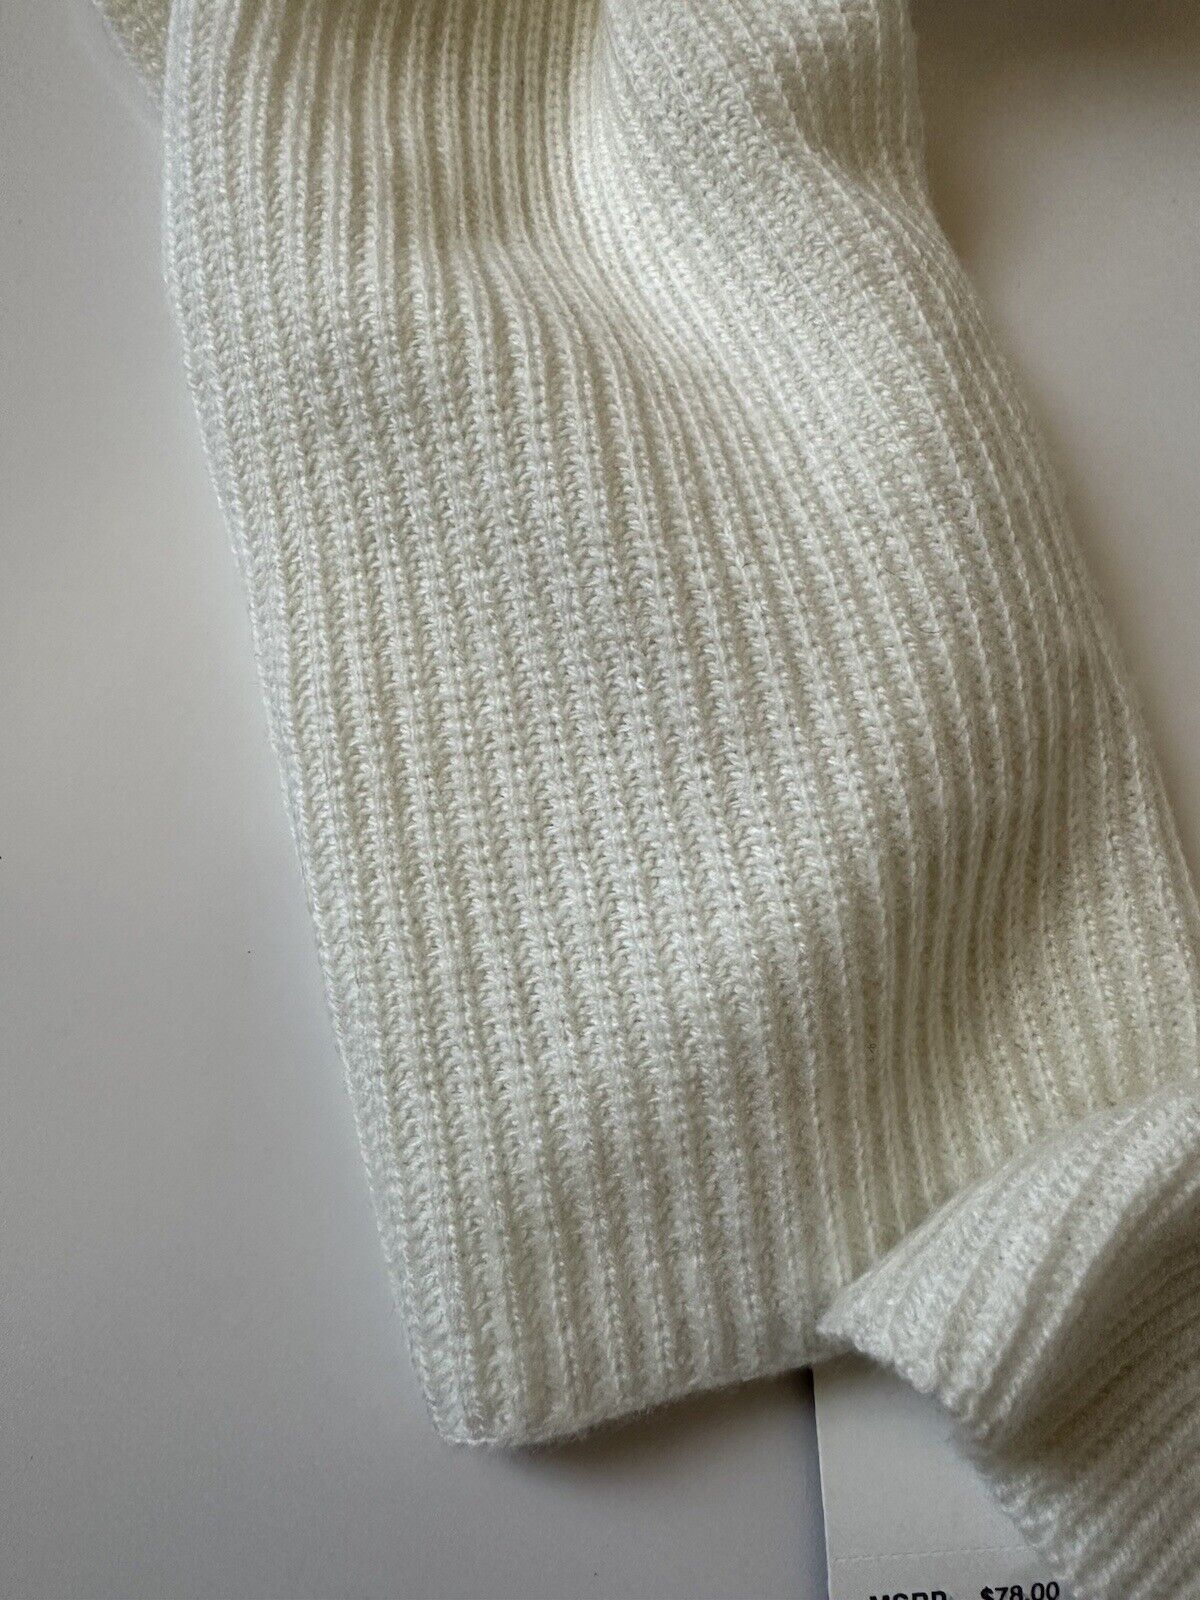 NWT $78 Polo Ralph Lauren Logo Knit White Scarf 193cmx33cm